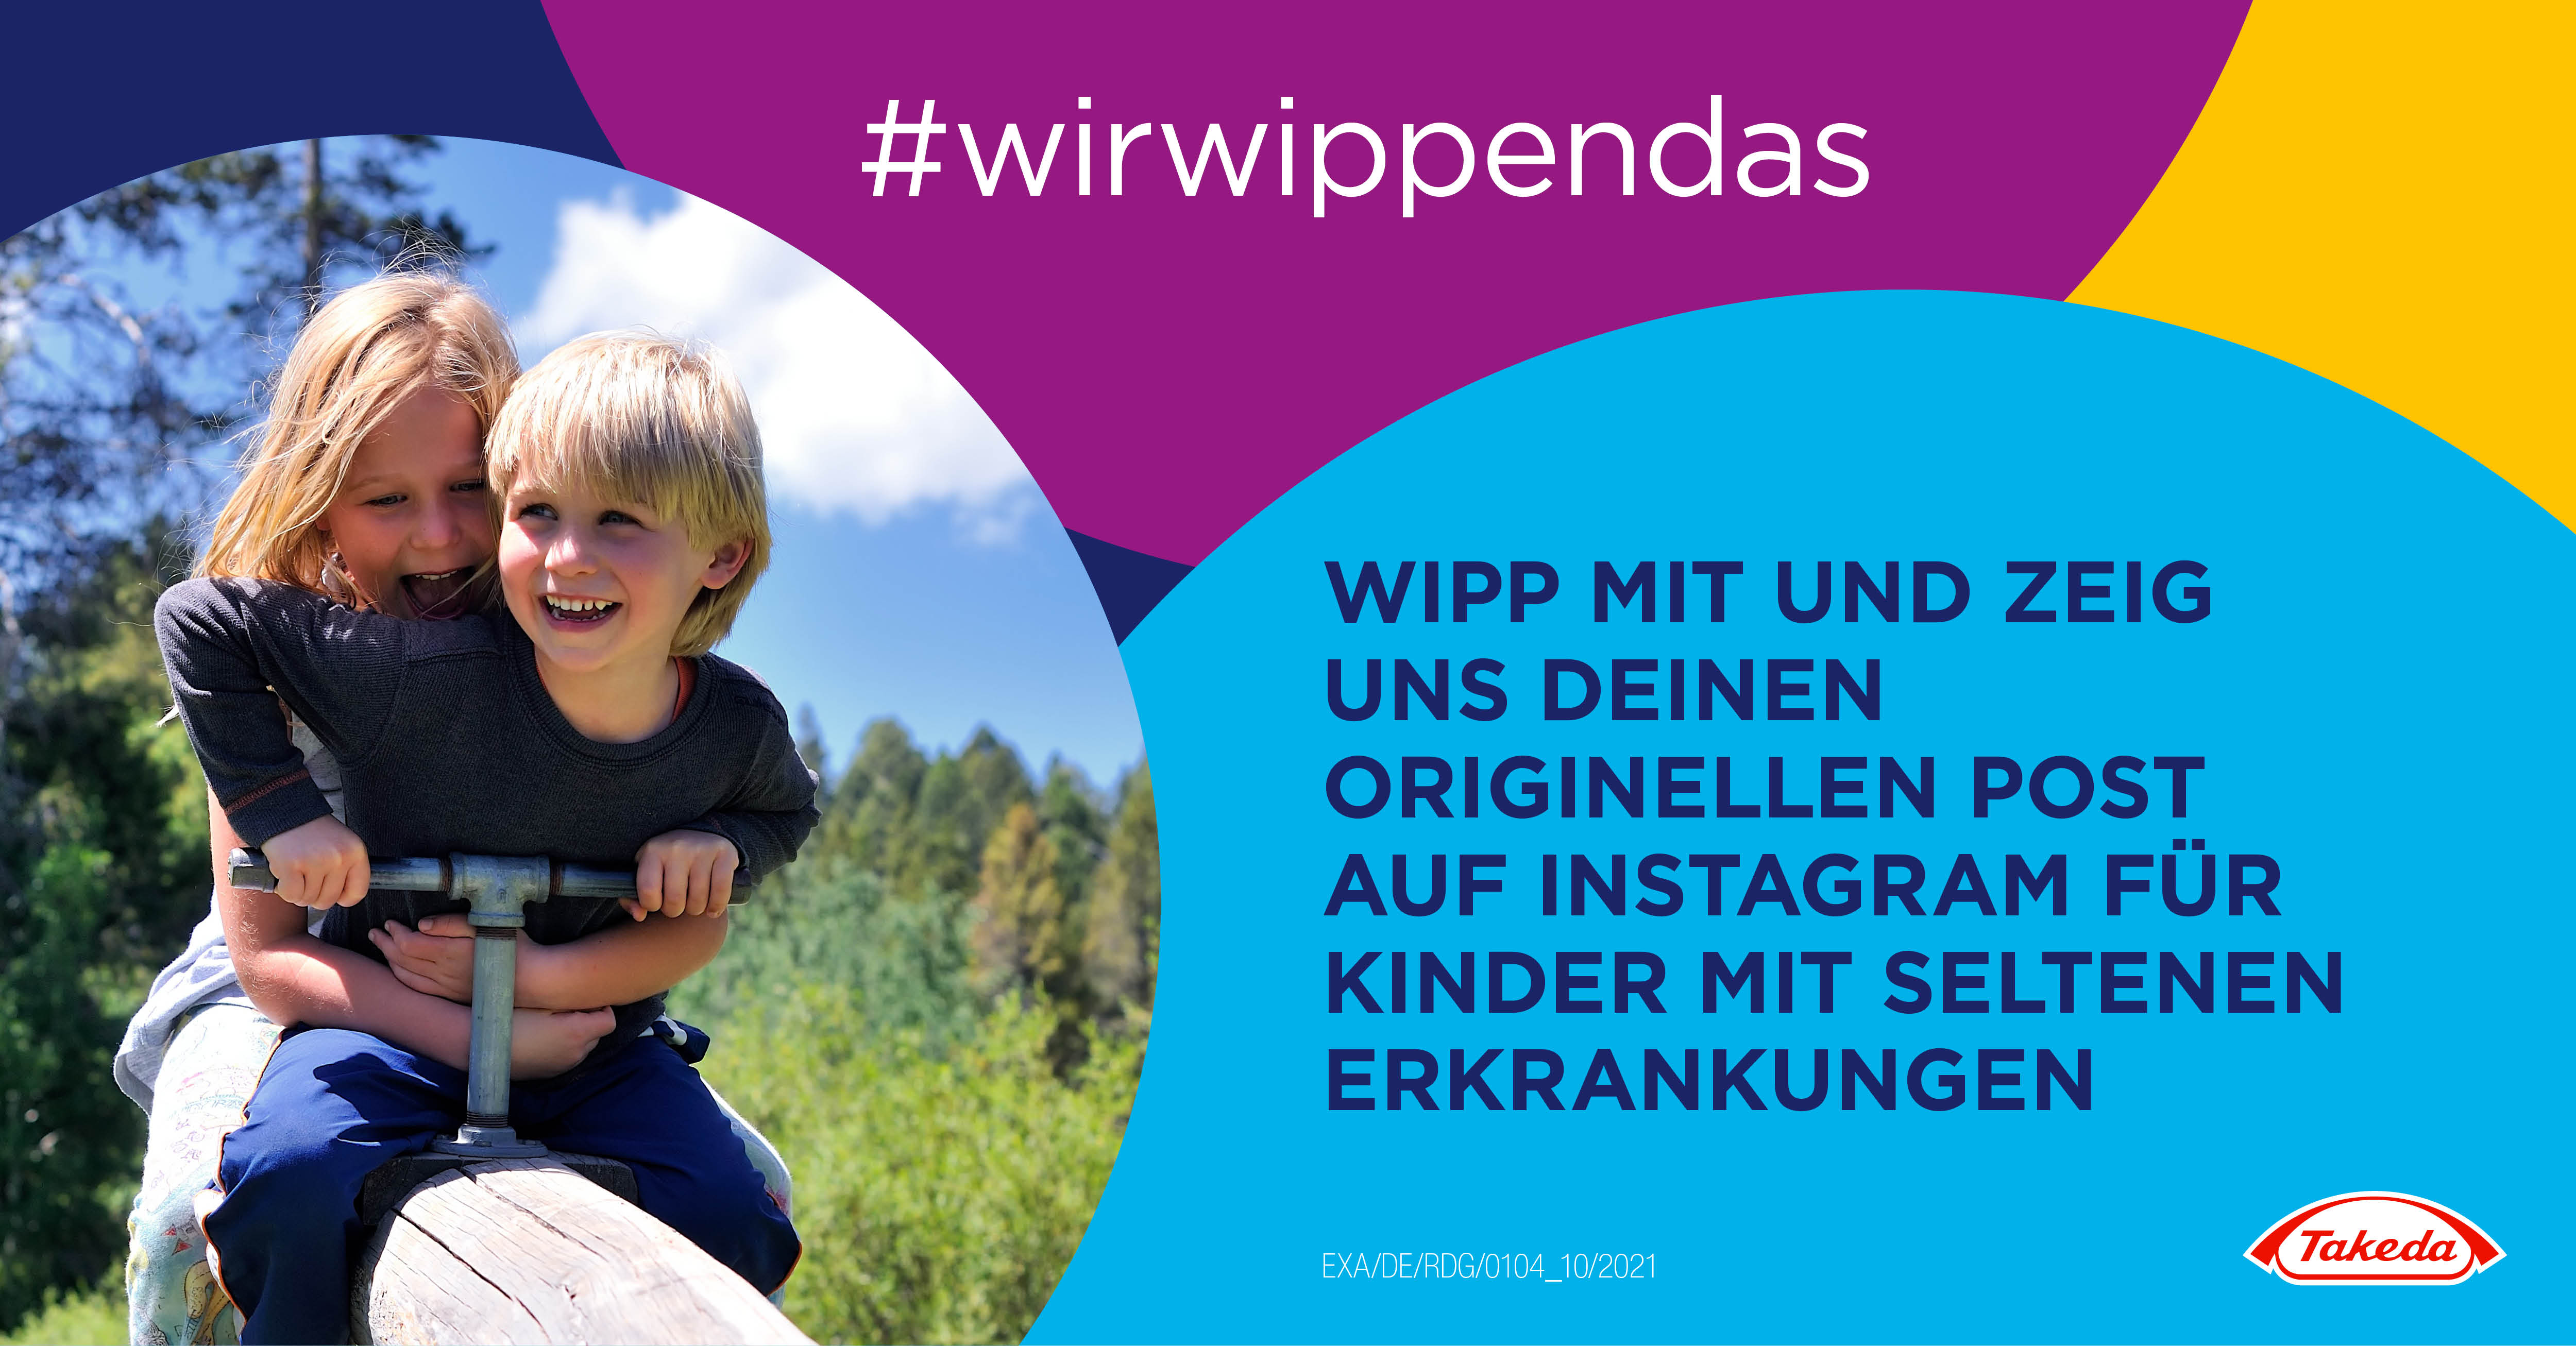 Wirwippendas_Post